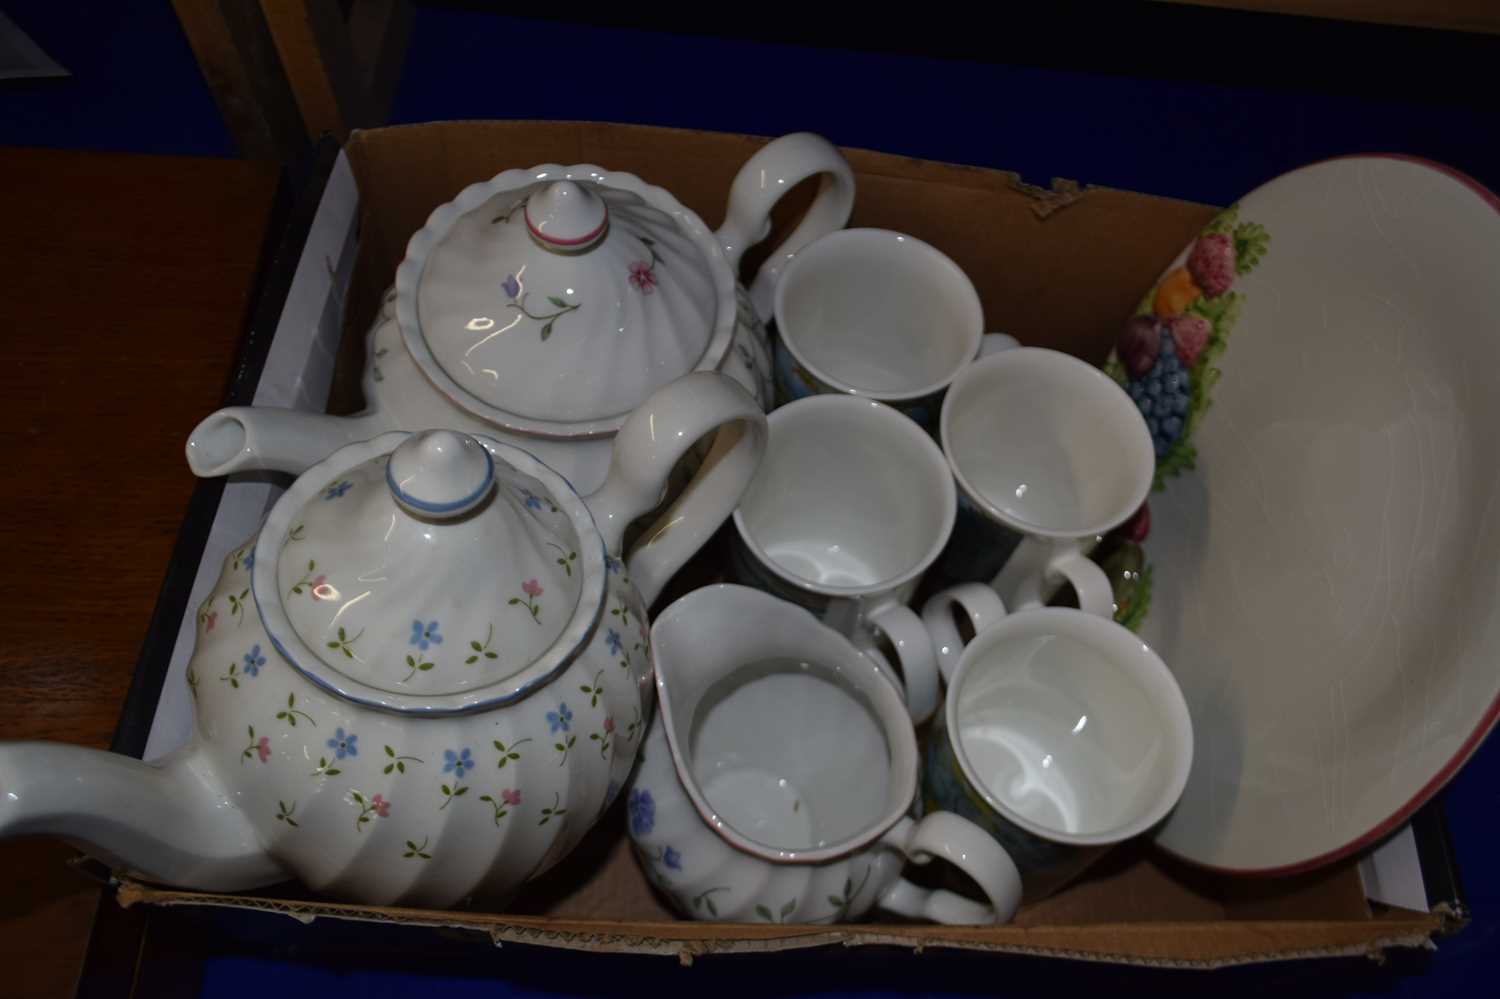 Assorted tea wares and mugs